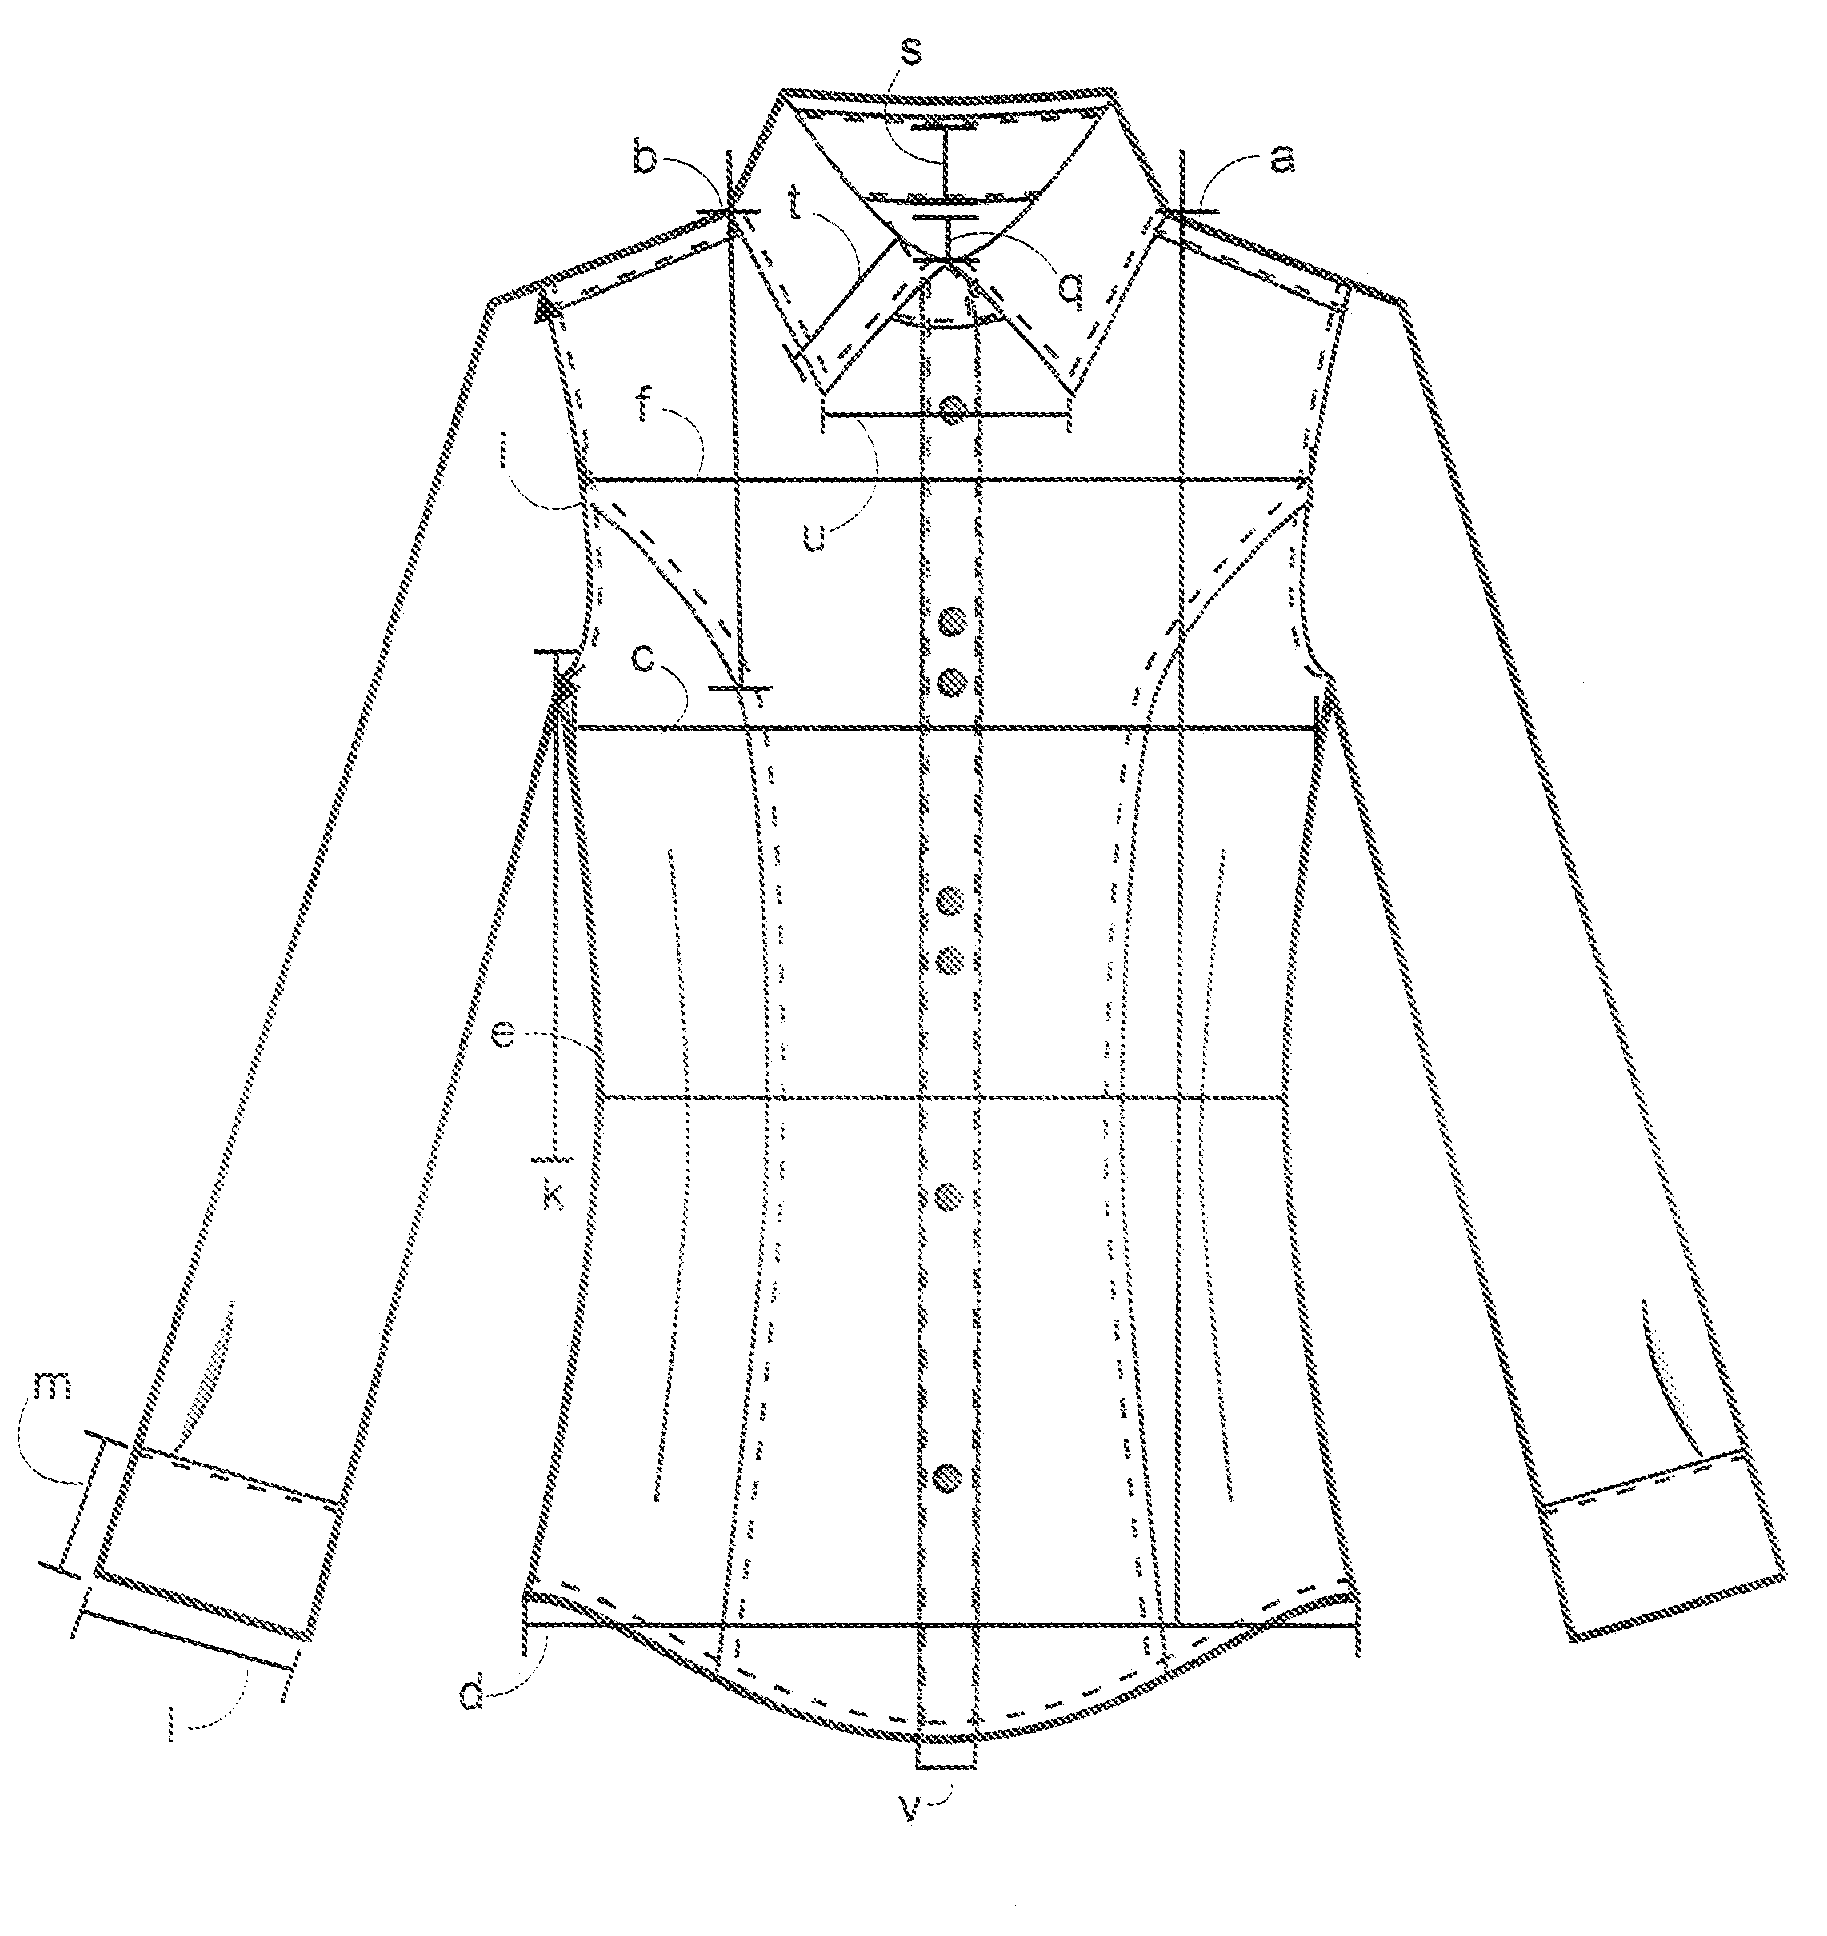 Methods for optimally adjusting measurements of garments